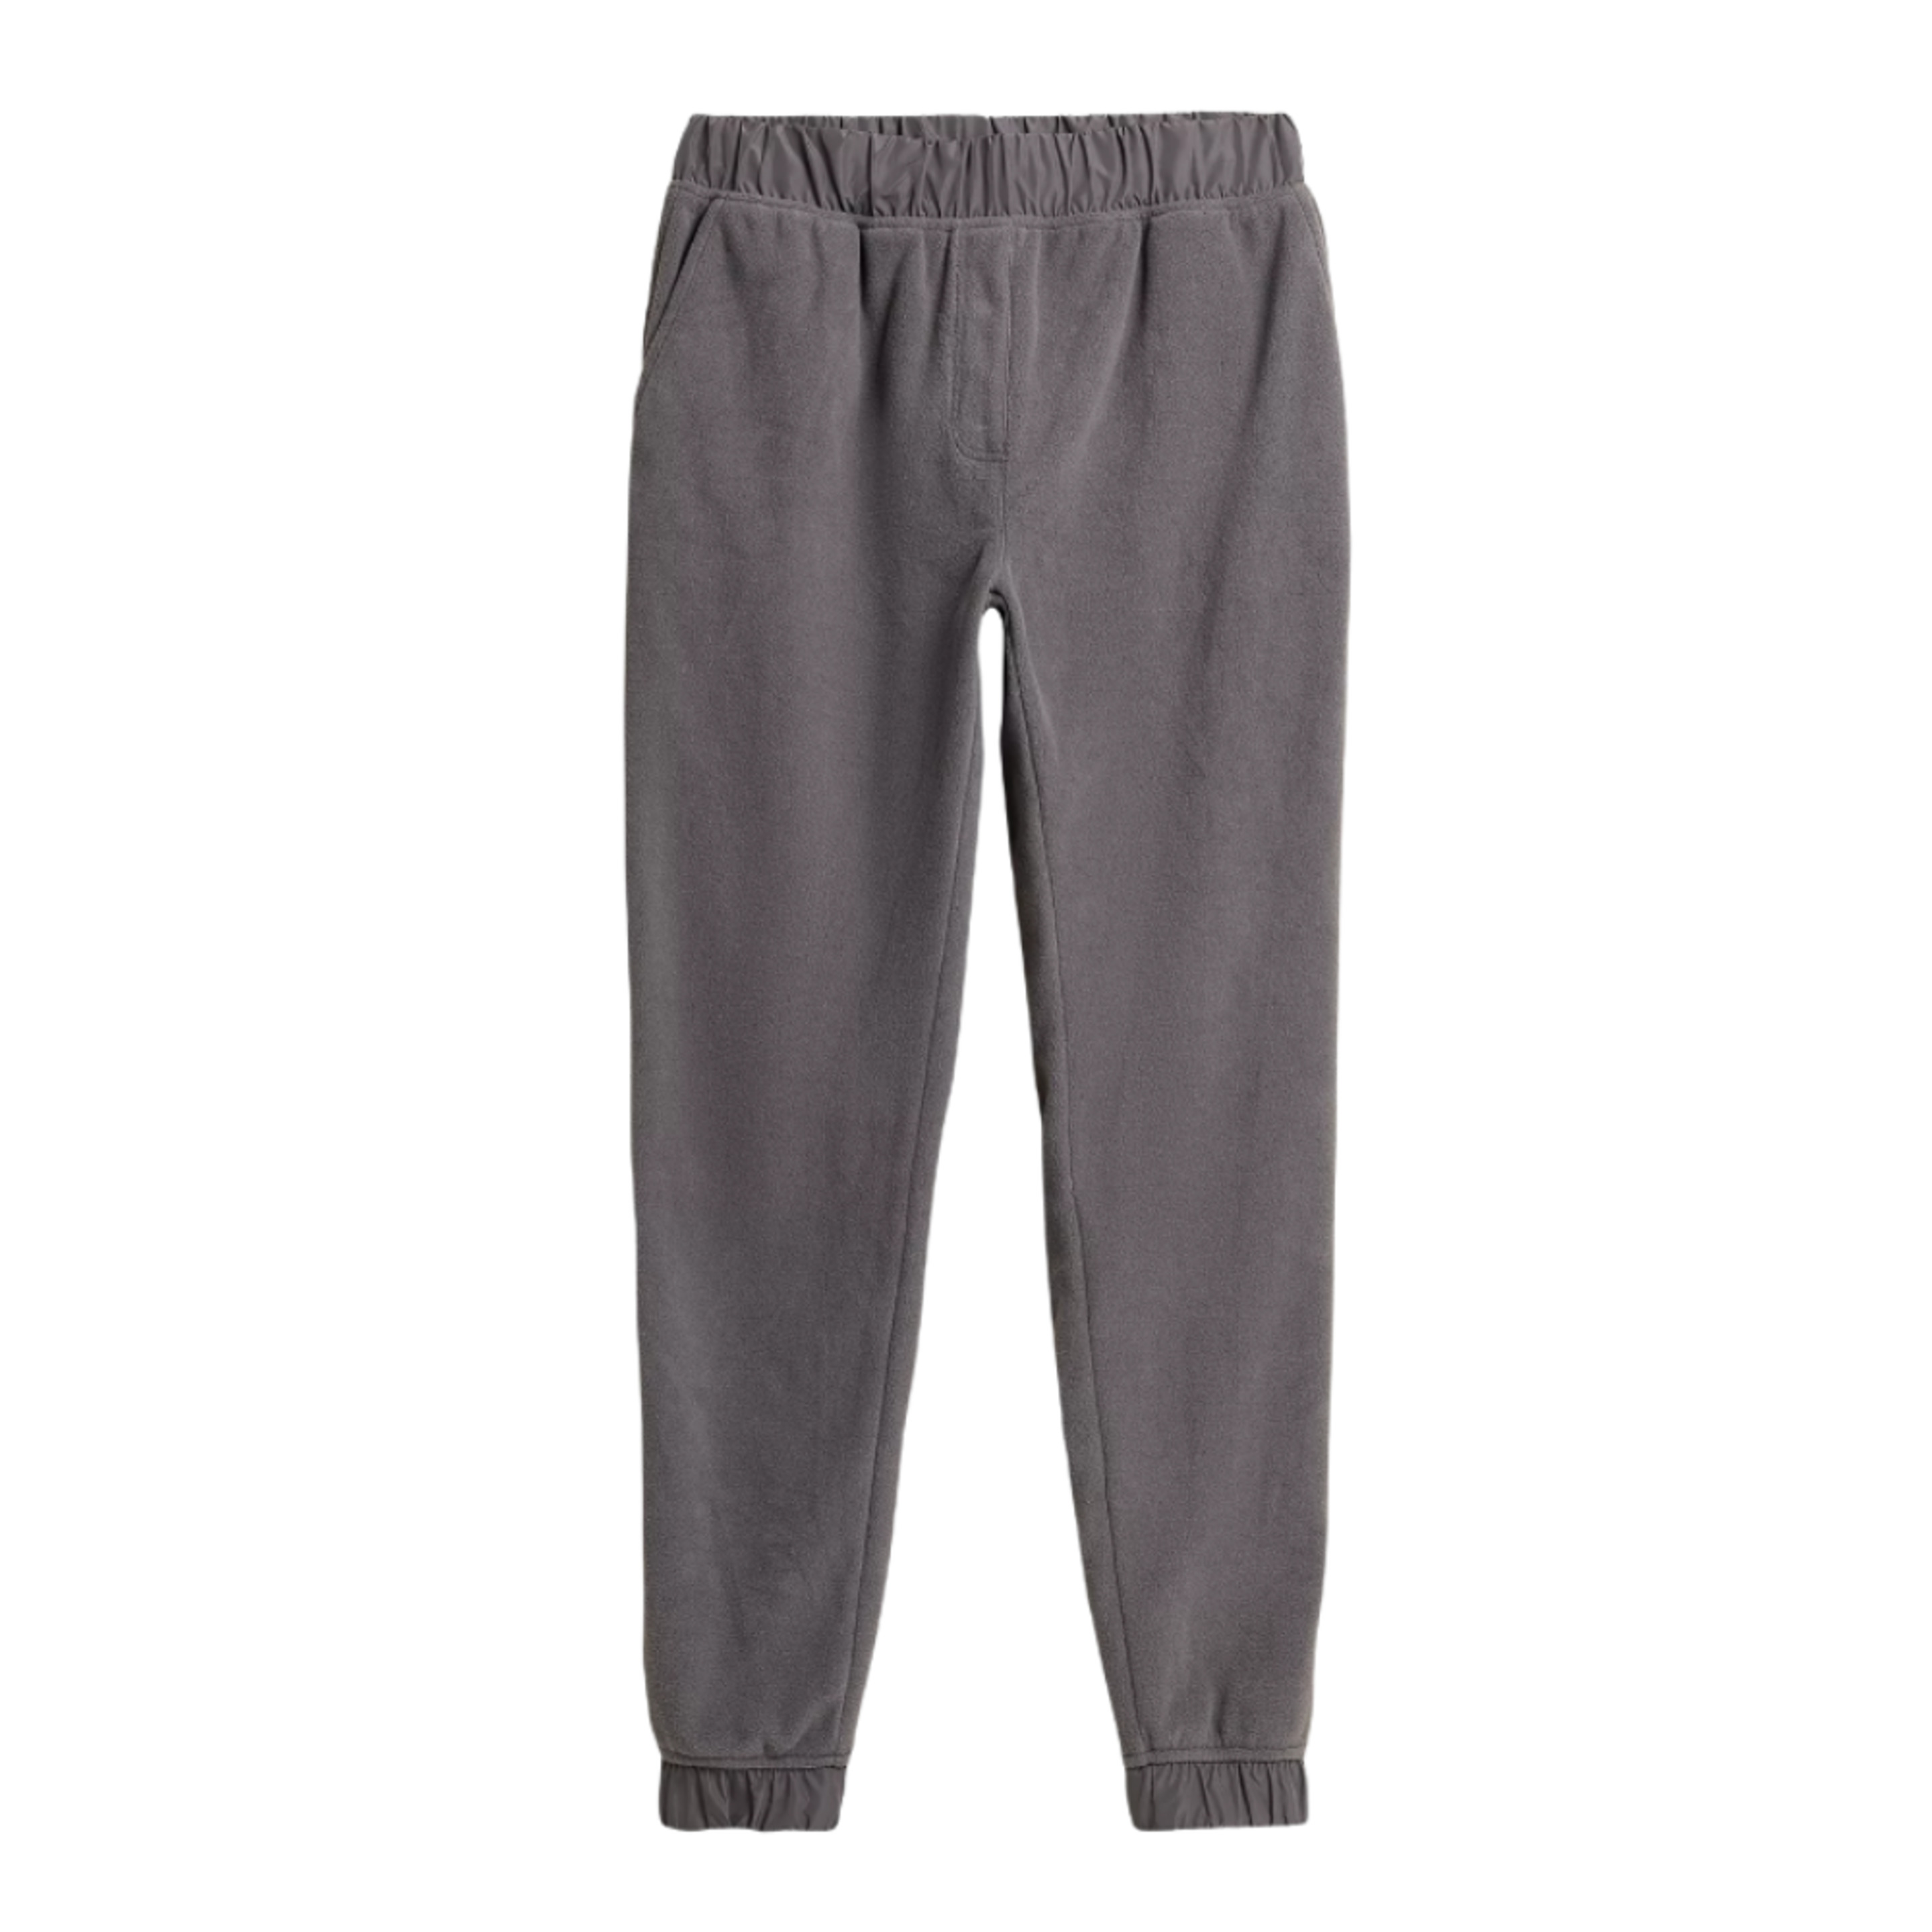 Pantalones 4f Clothes H4z21-spdd010 - gris - 